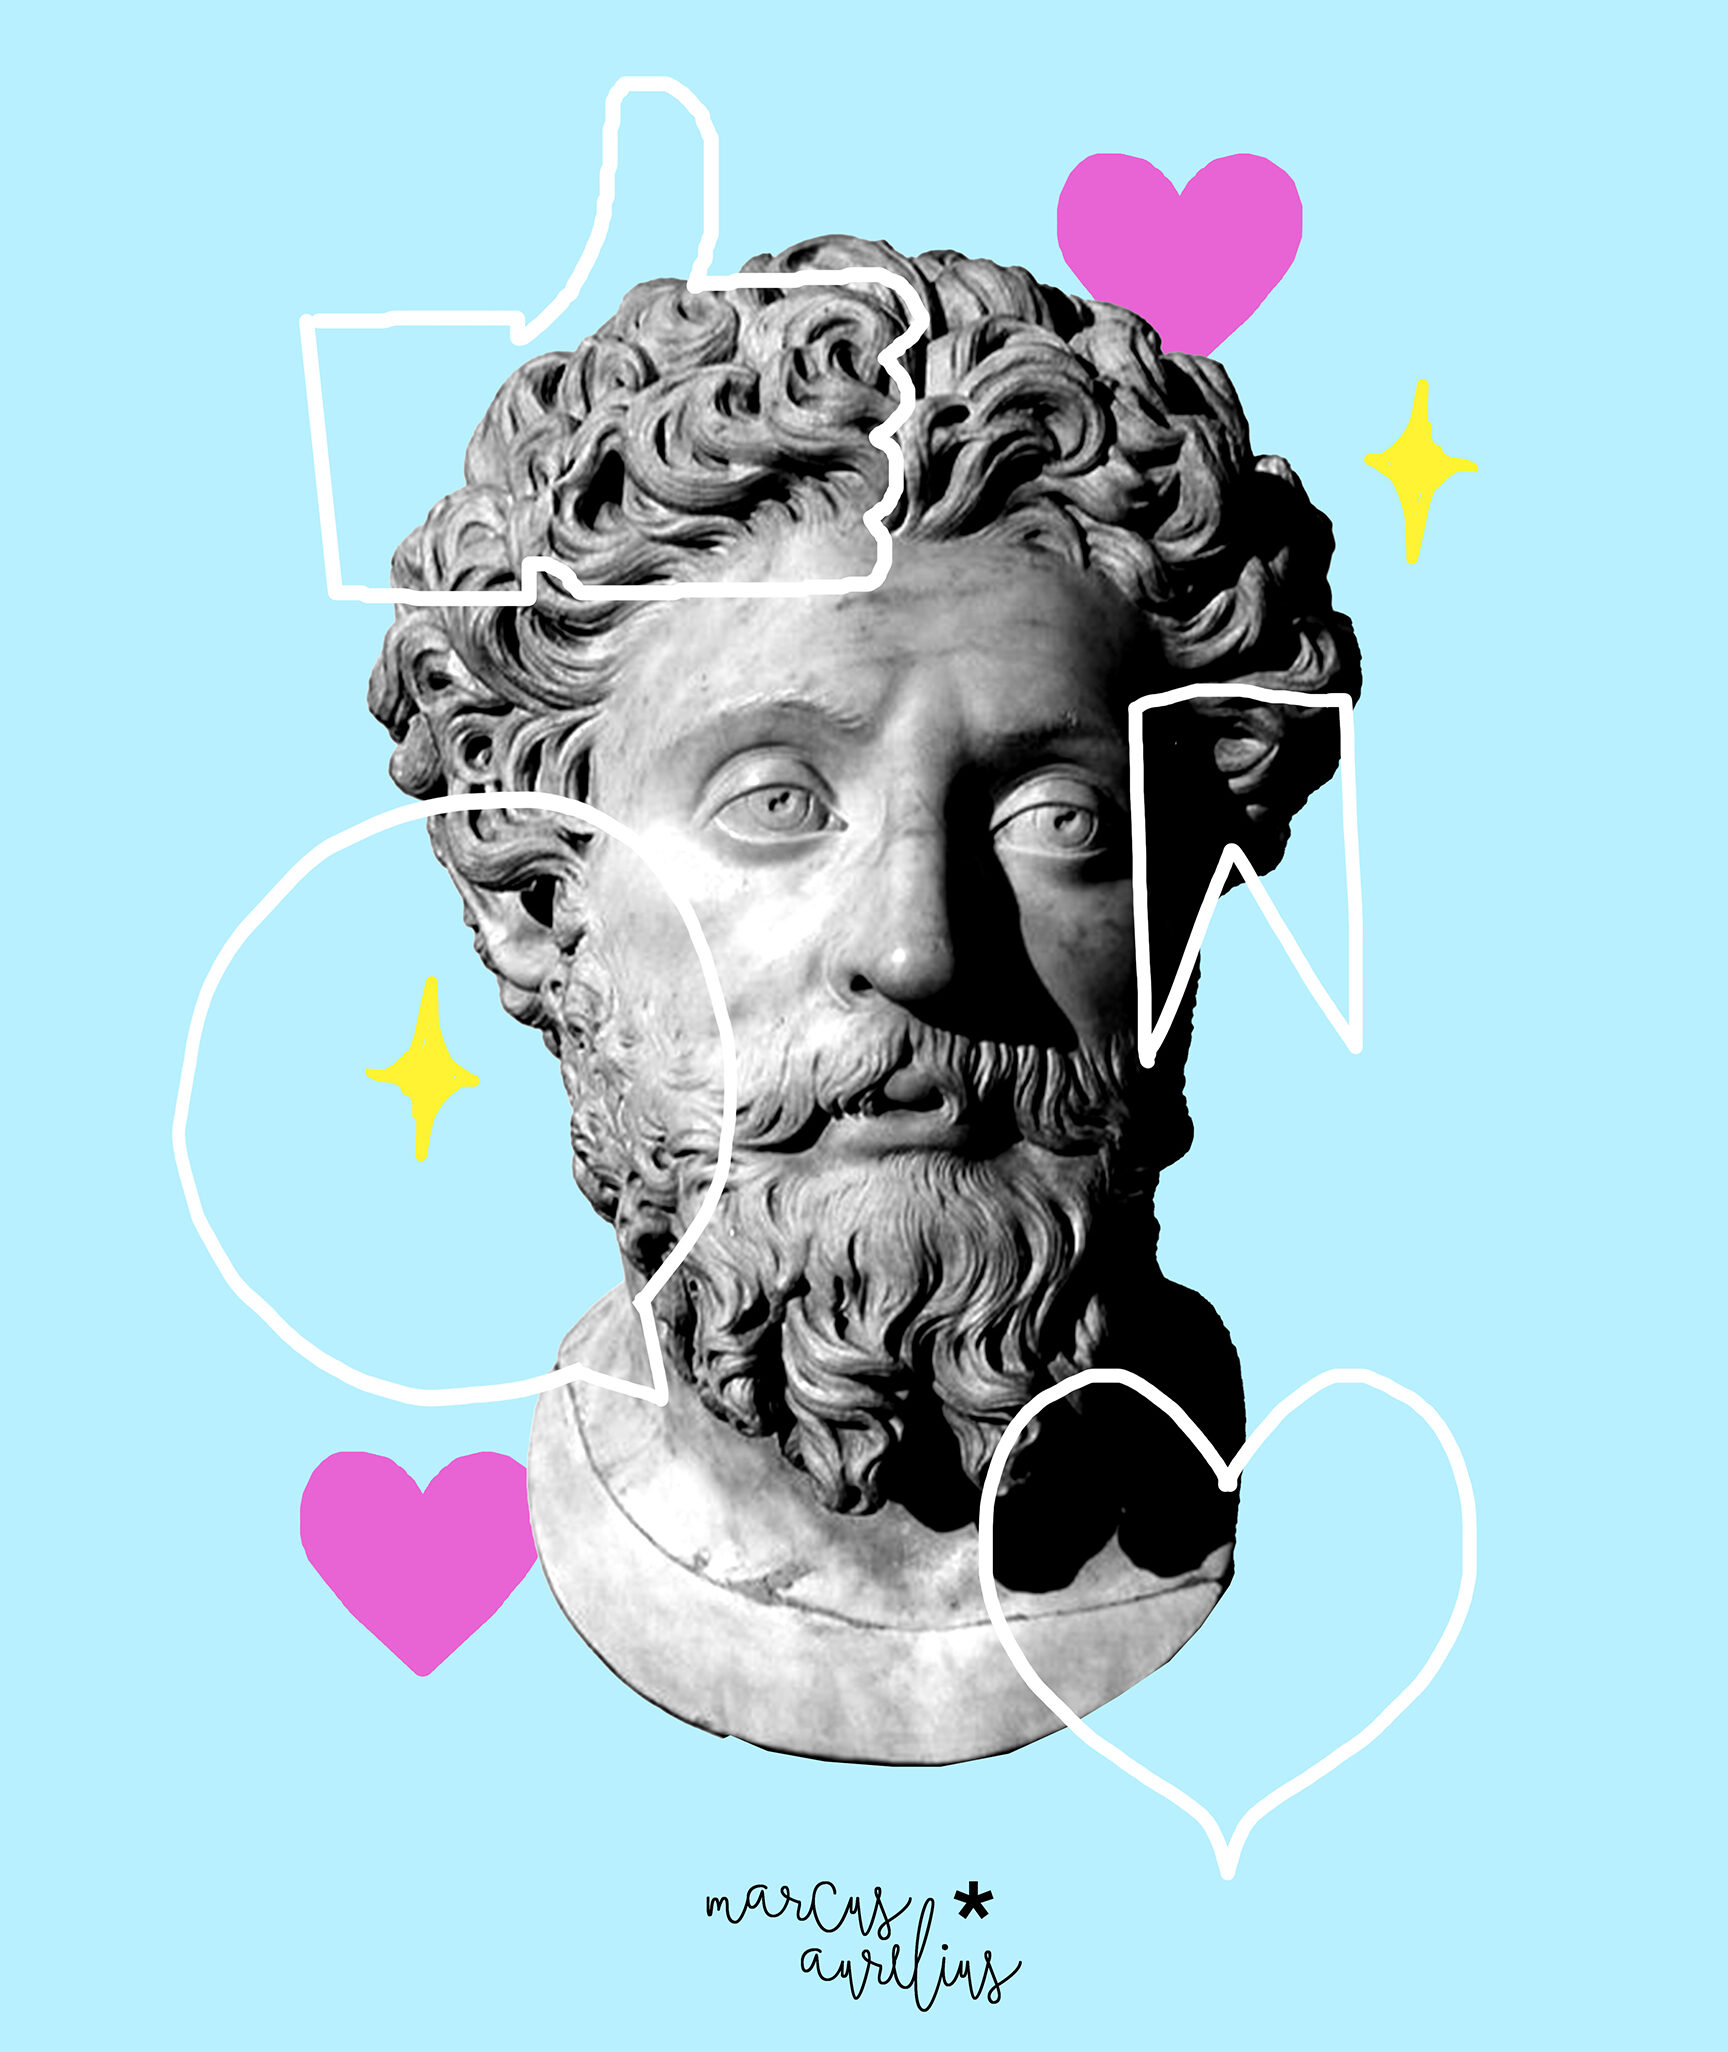 La perspectiva de Marcus Aurelius sobre el cristianismo